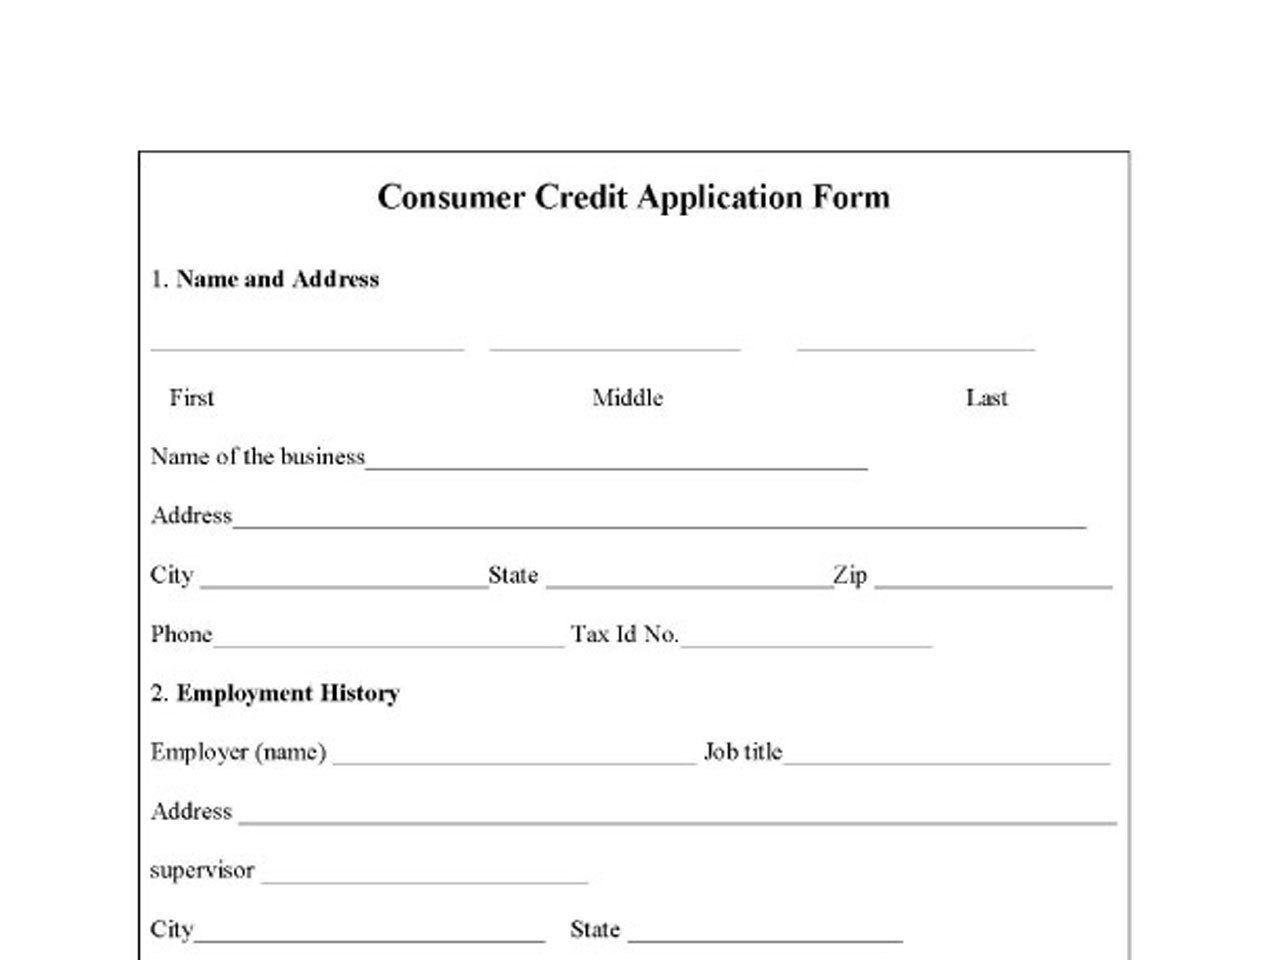 Consumer credit application form